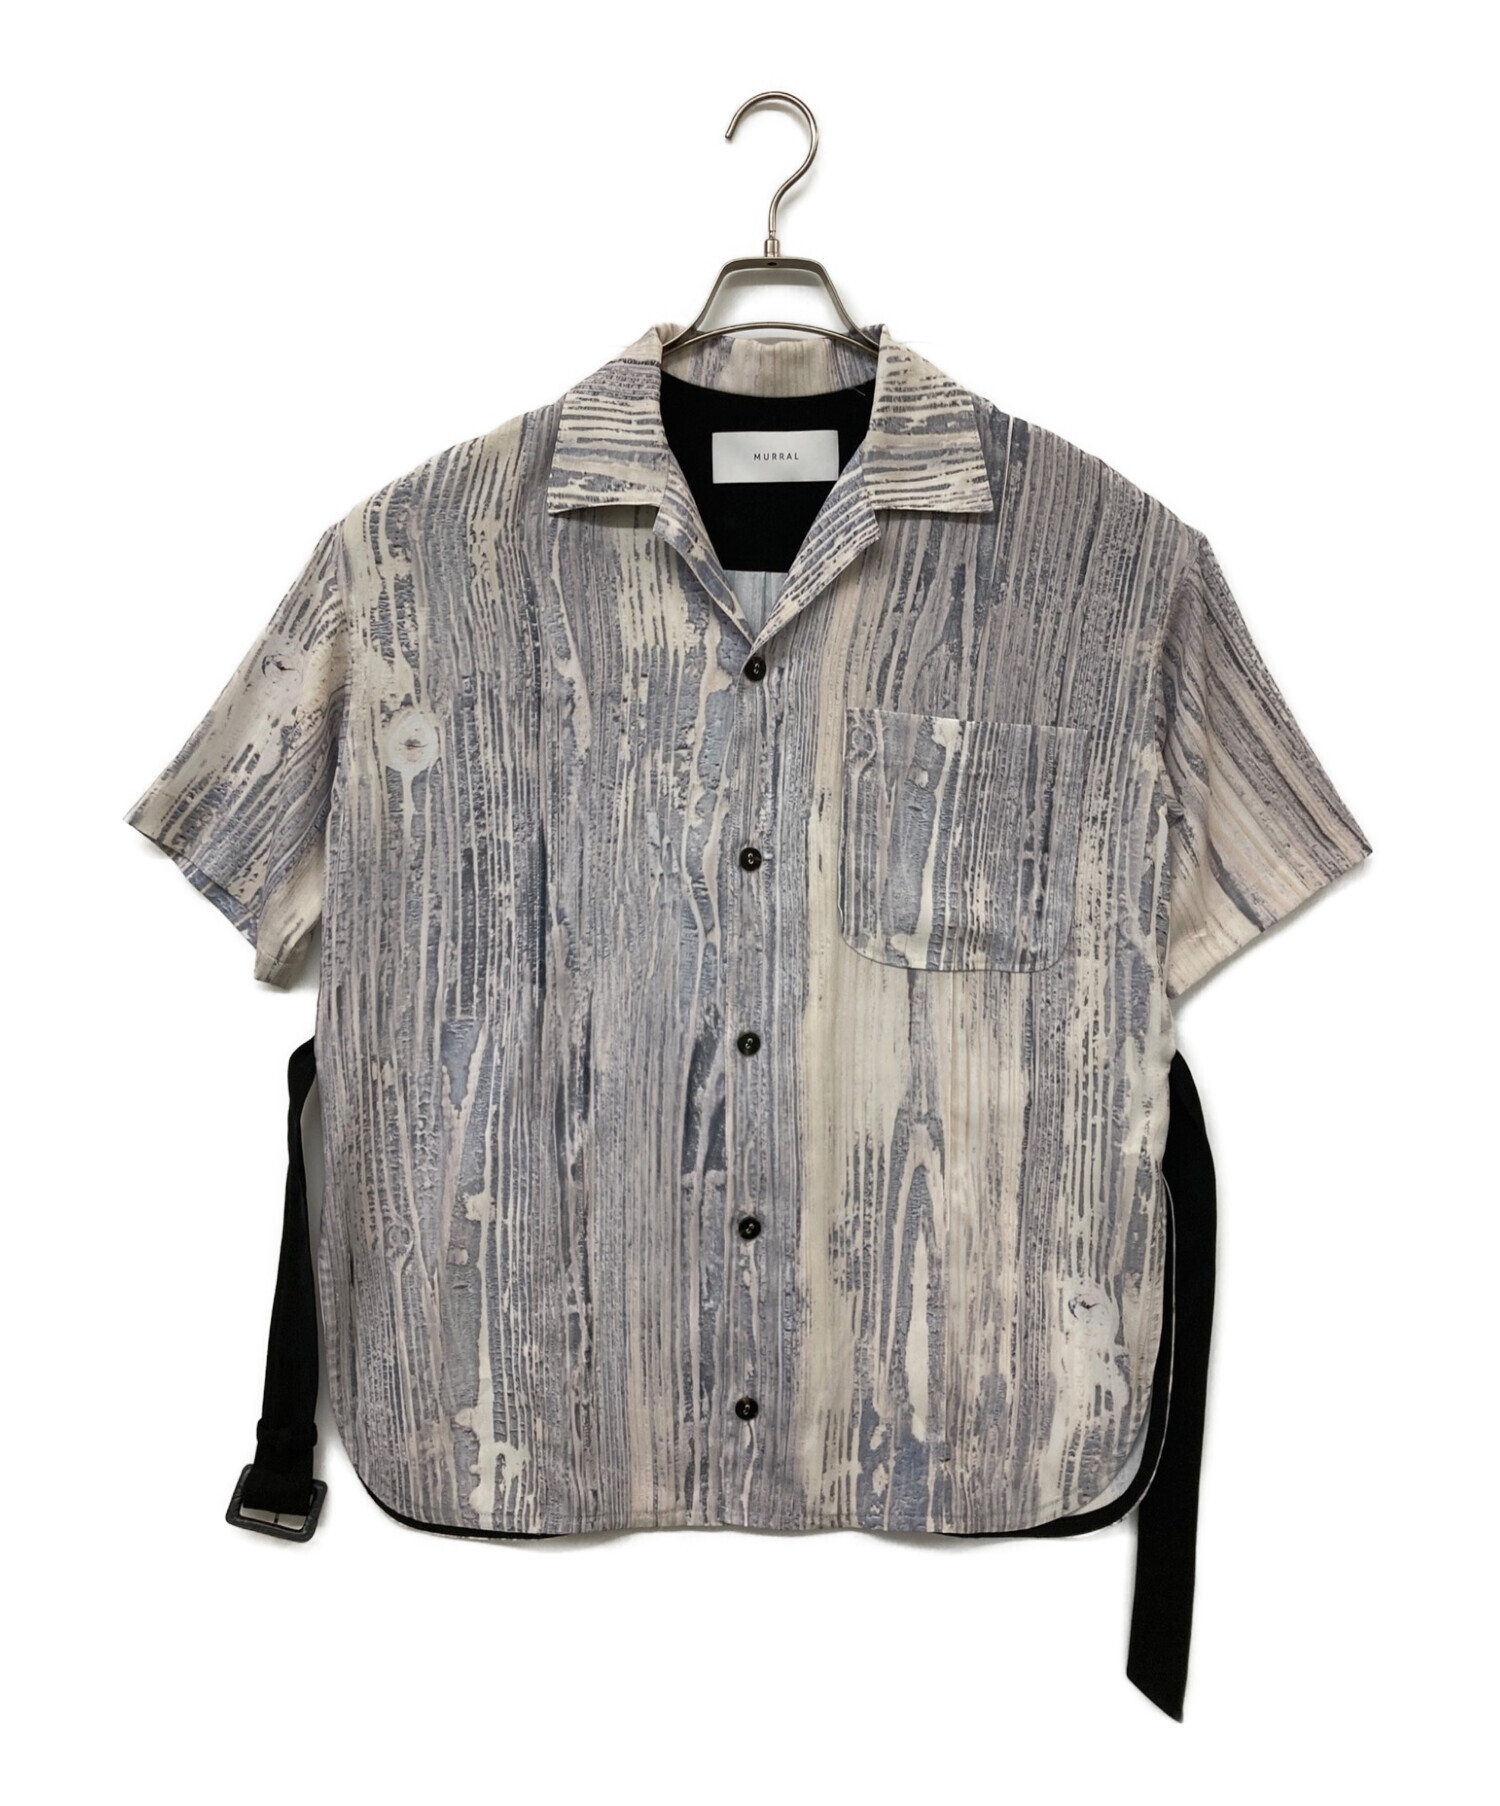 MURRAL (ミューラル) Baum shirts with waist belt パープル サイズ:Free